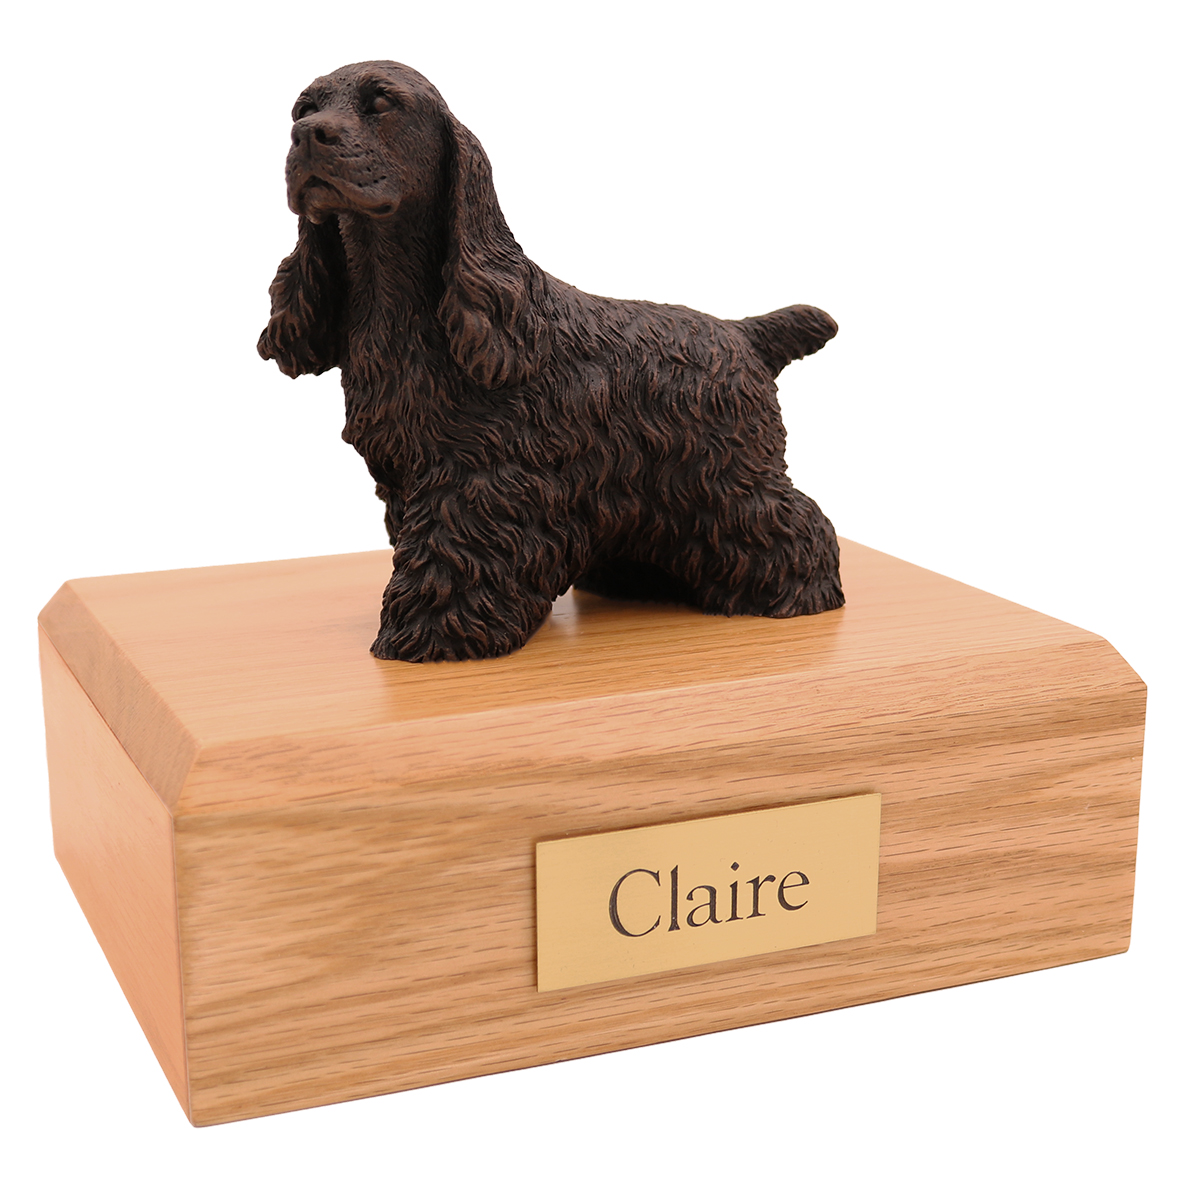 Dog, Cocker Spaniel, Bronze - Figurine Urn